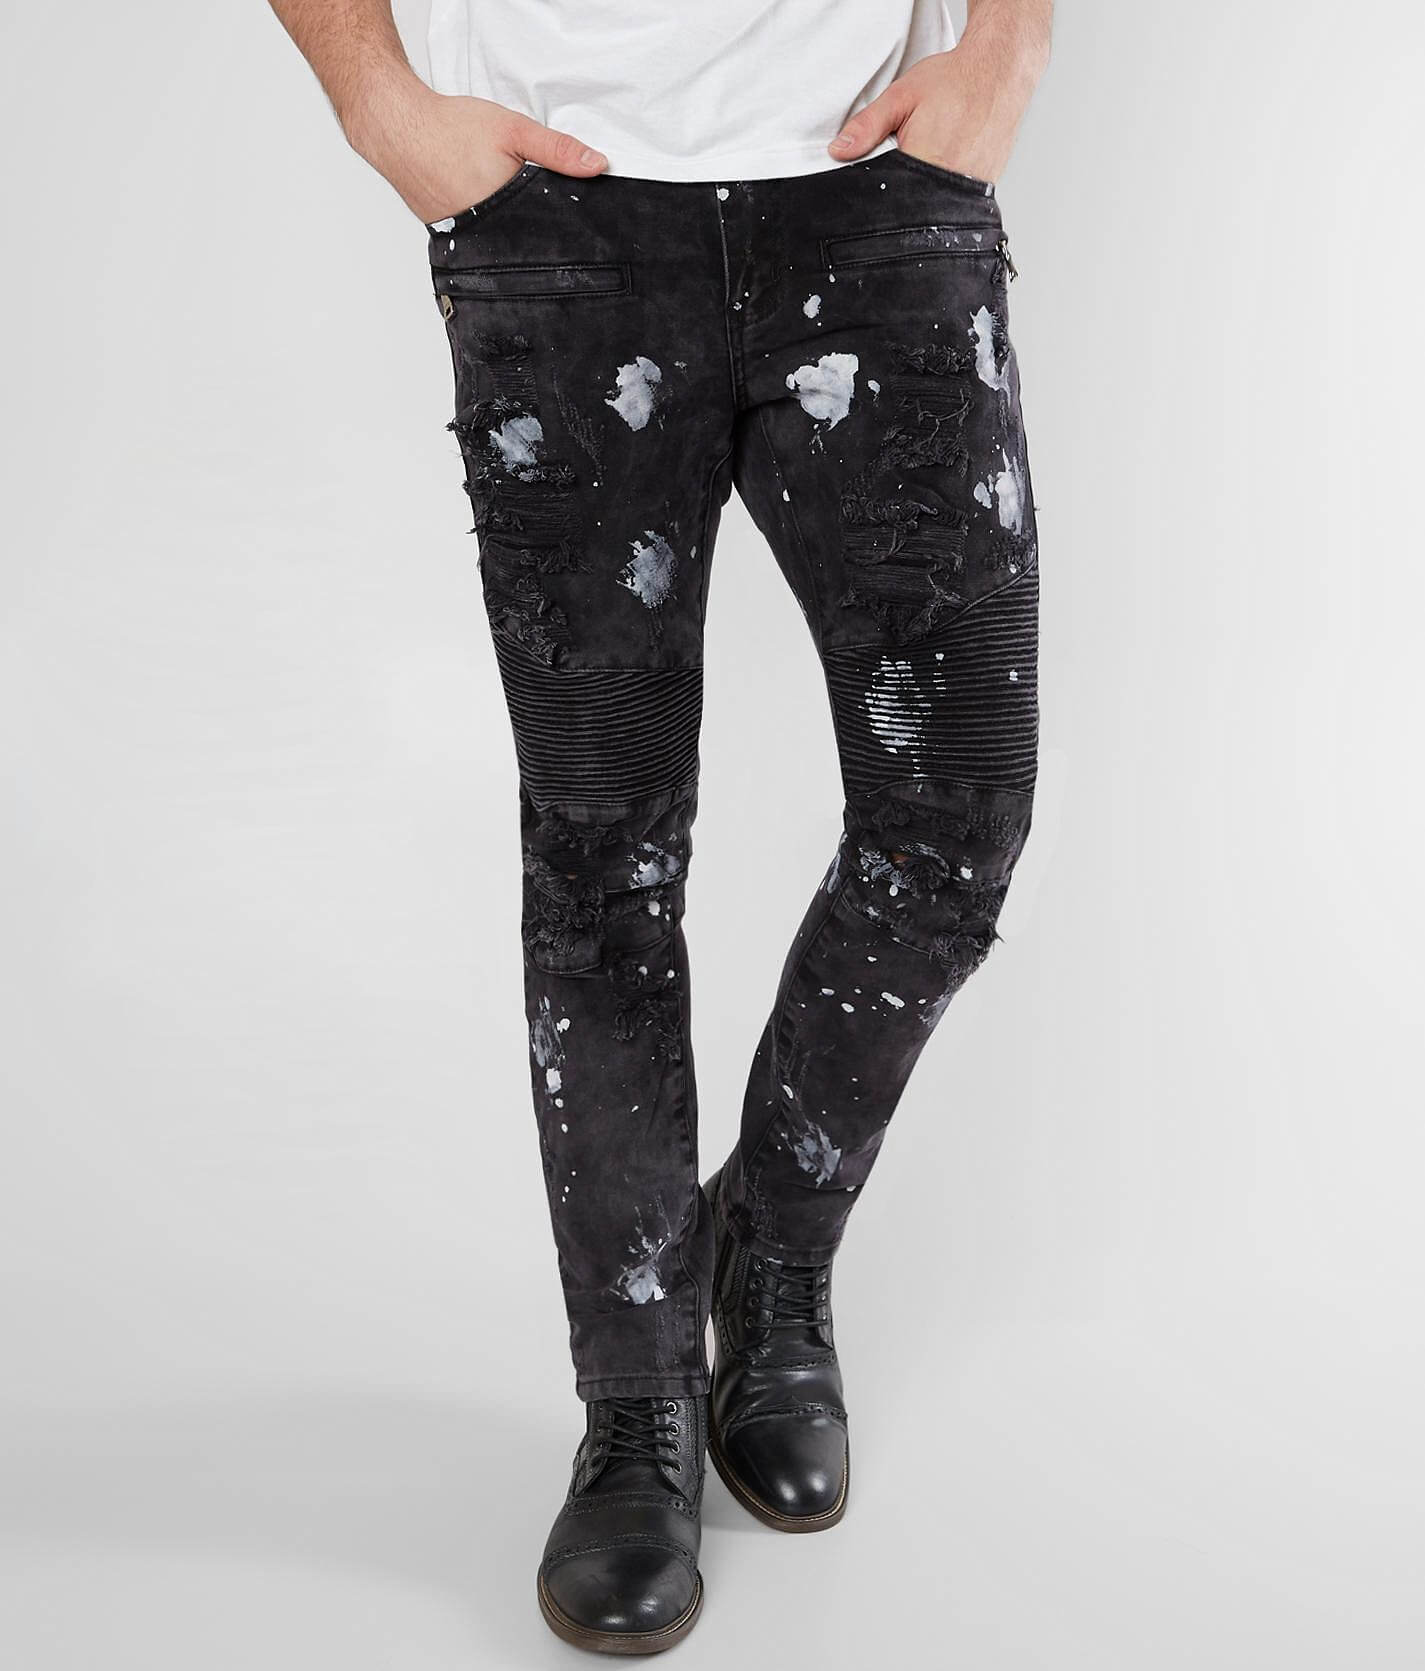 grey paint splatter jeans mens